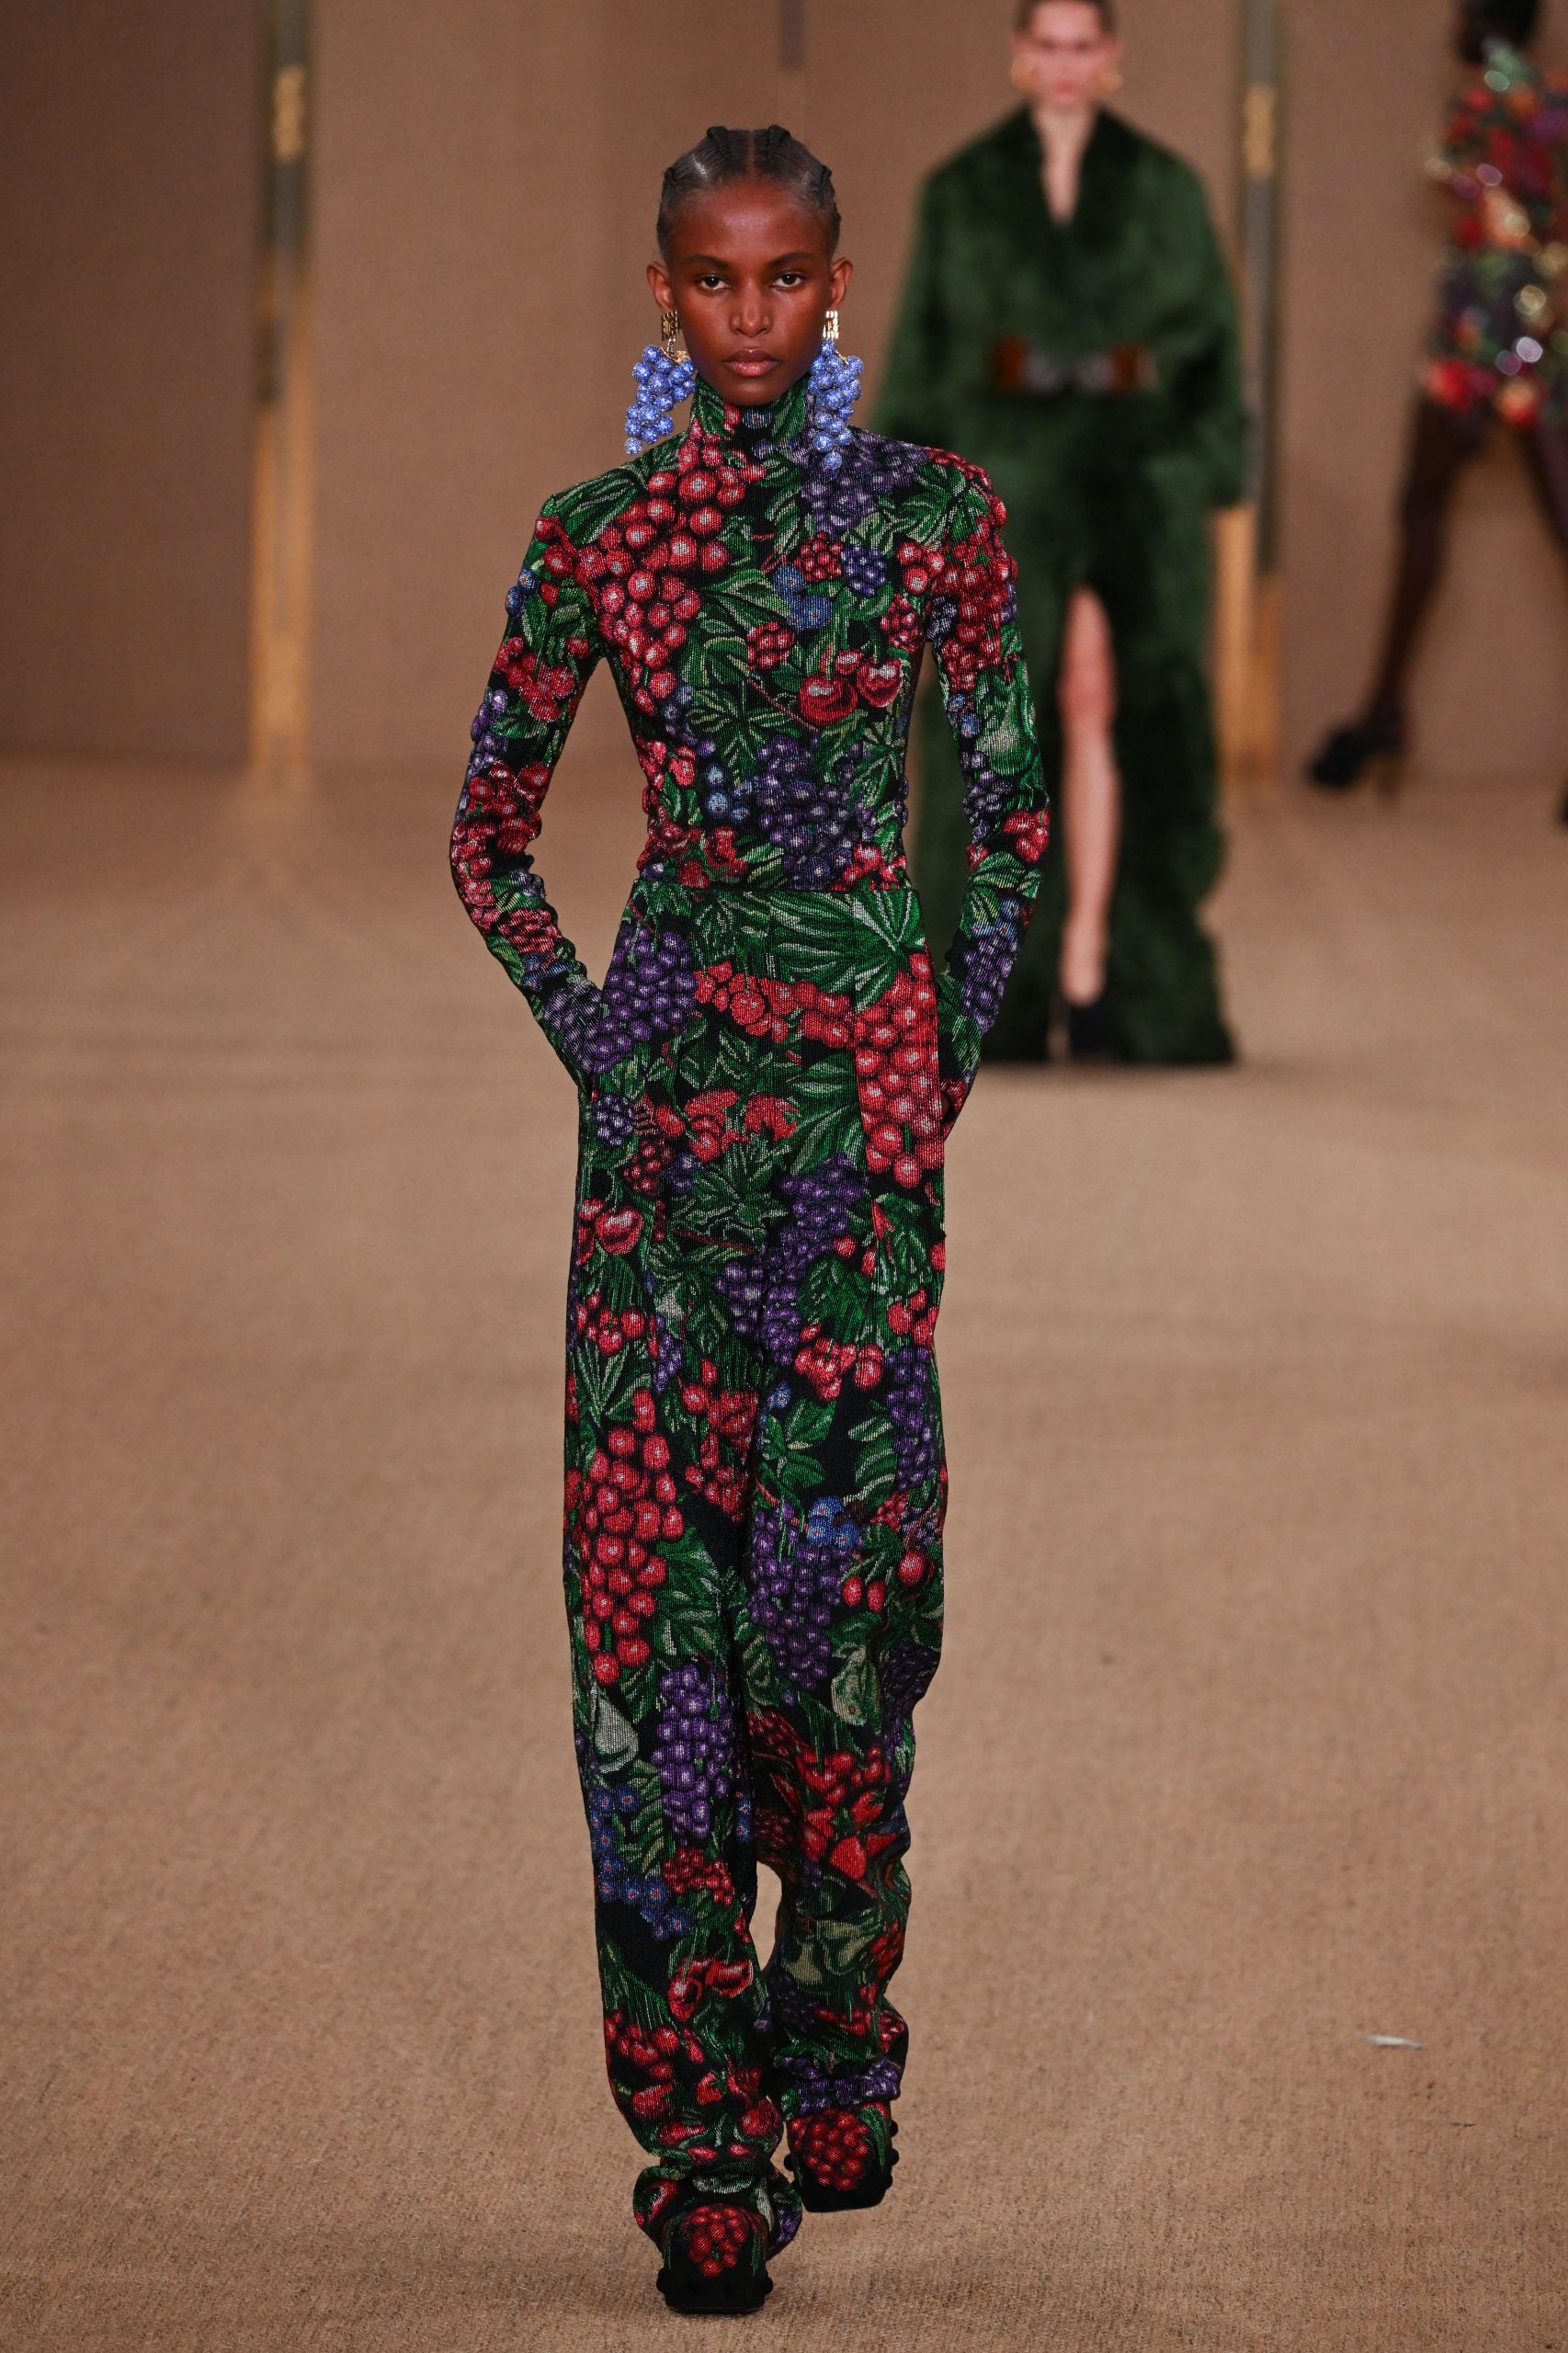 Essence Fashion Digest: Schiaparelli Reveals A Striking Collection, Lori Harvey Wears Ferragamo, And More